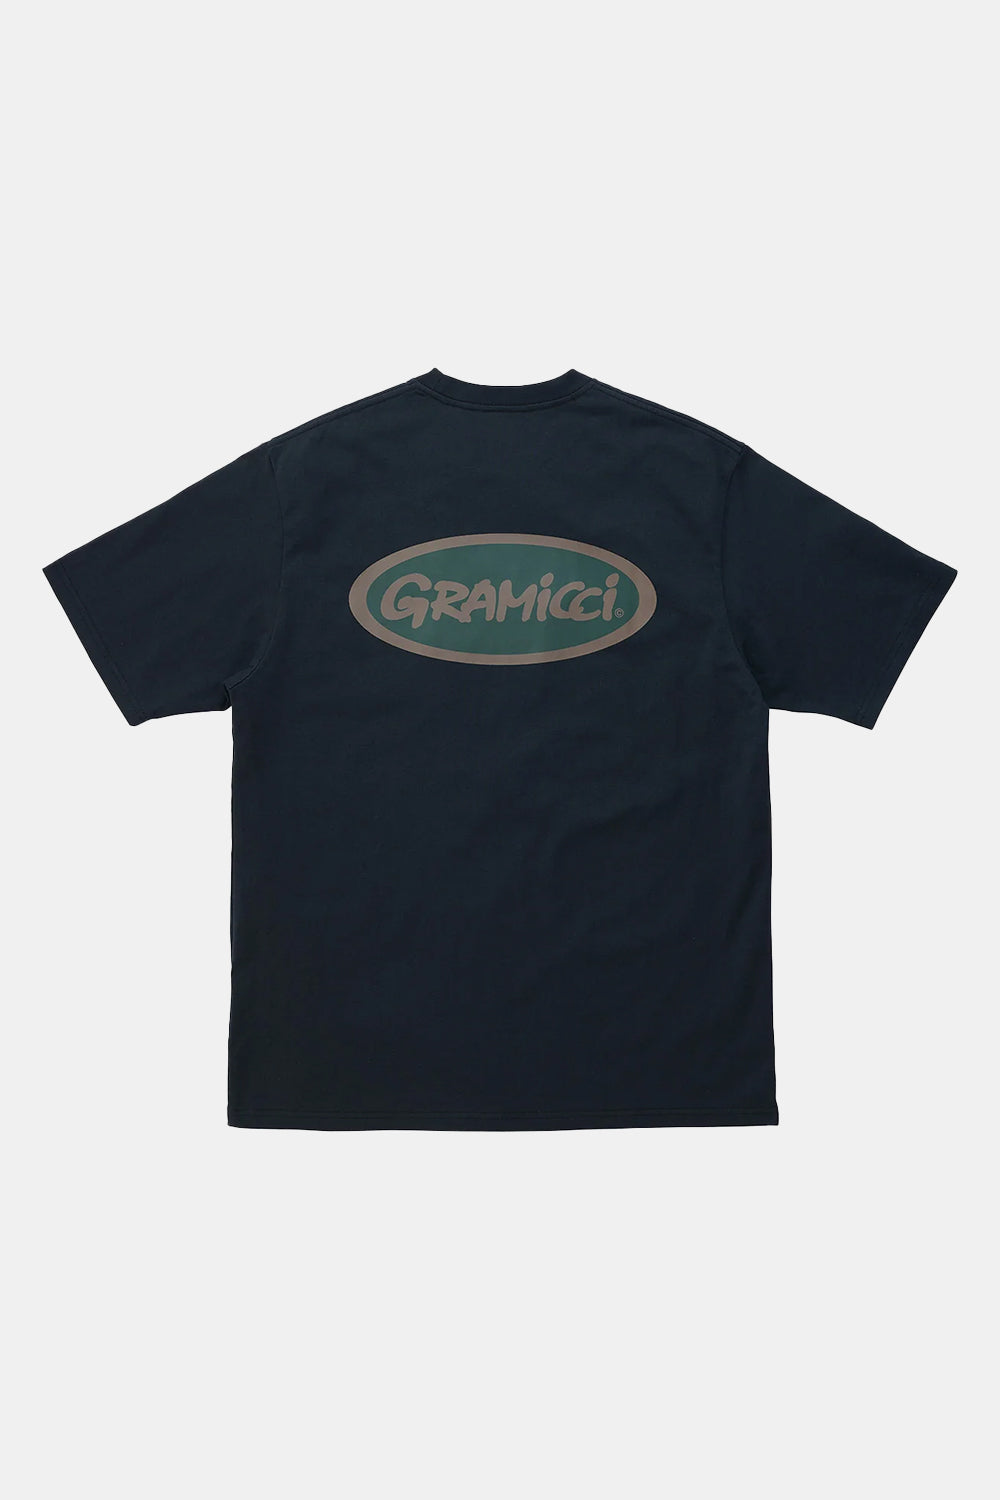 Gramicci Oval T-Shirt (Vintage Black)